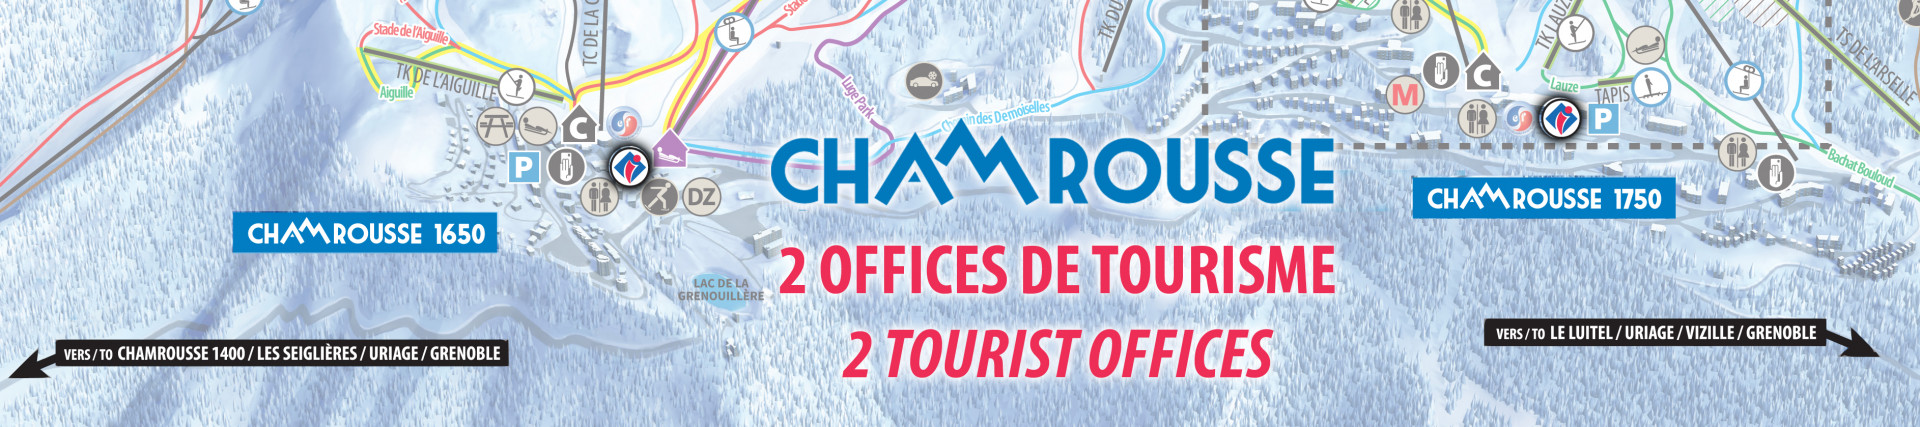 Chamrousse plan station office tourisme 1650 1750 montagne ski grenoble isère alpes france